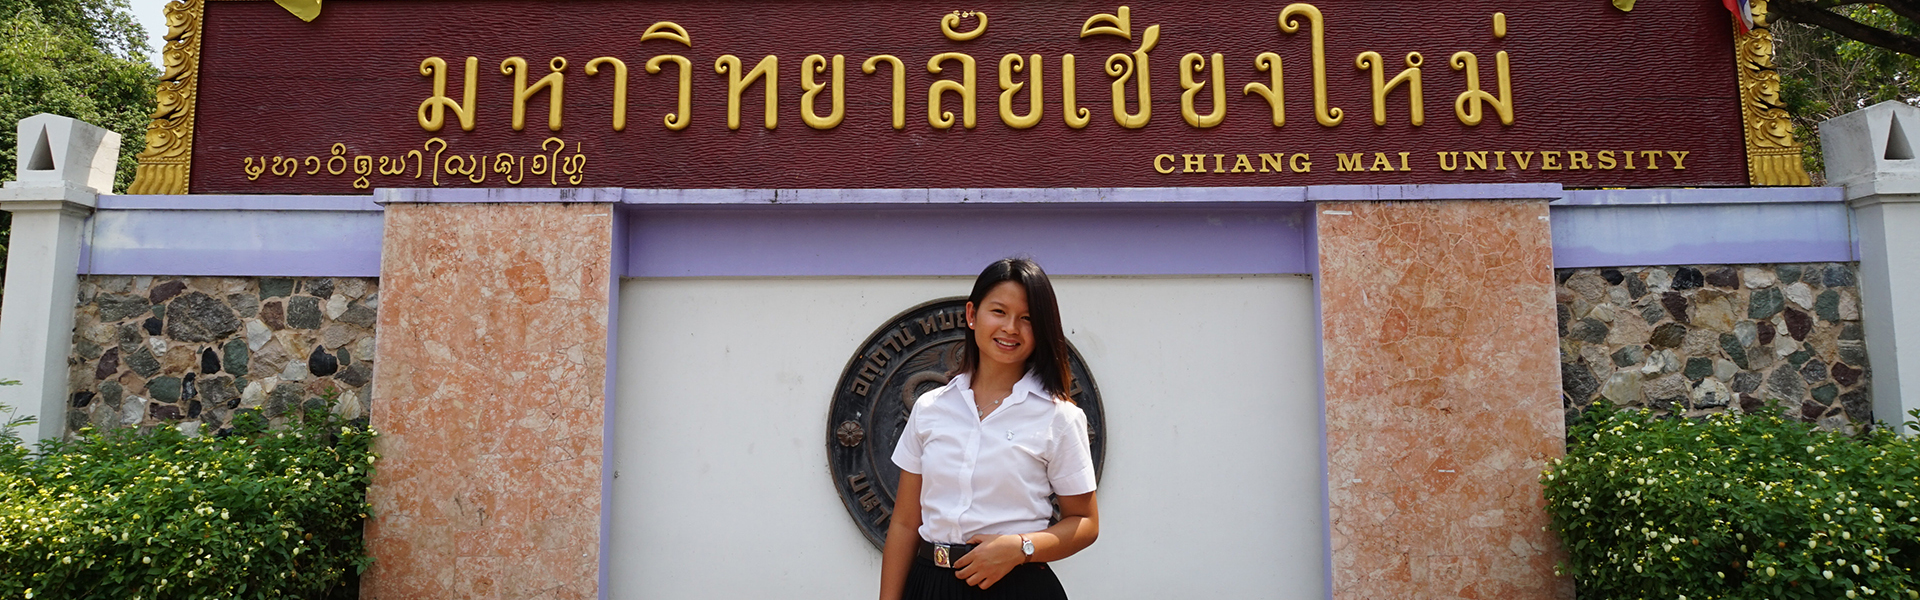 Student Sumya Paung in Chang Mai, Thailand